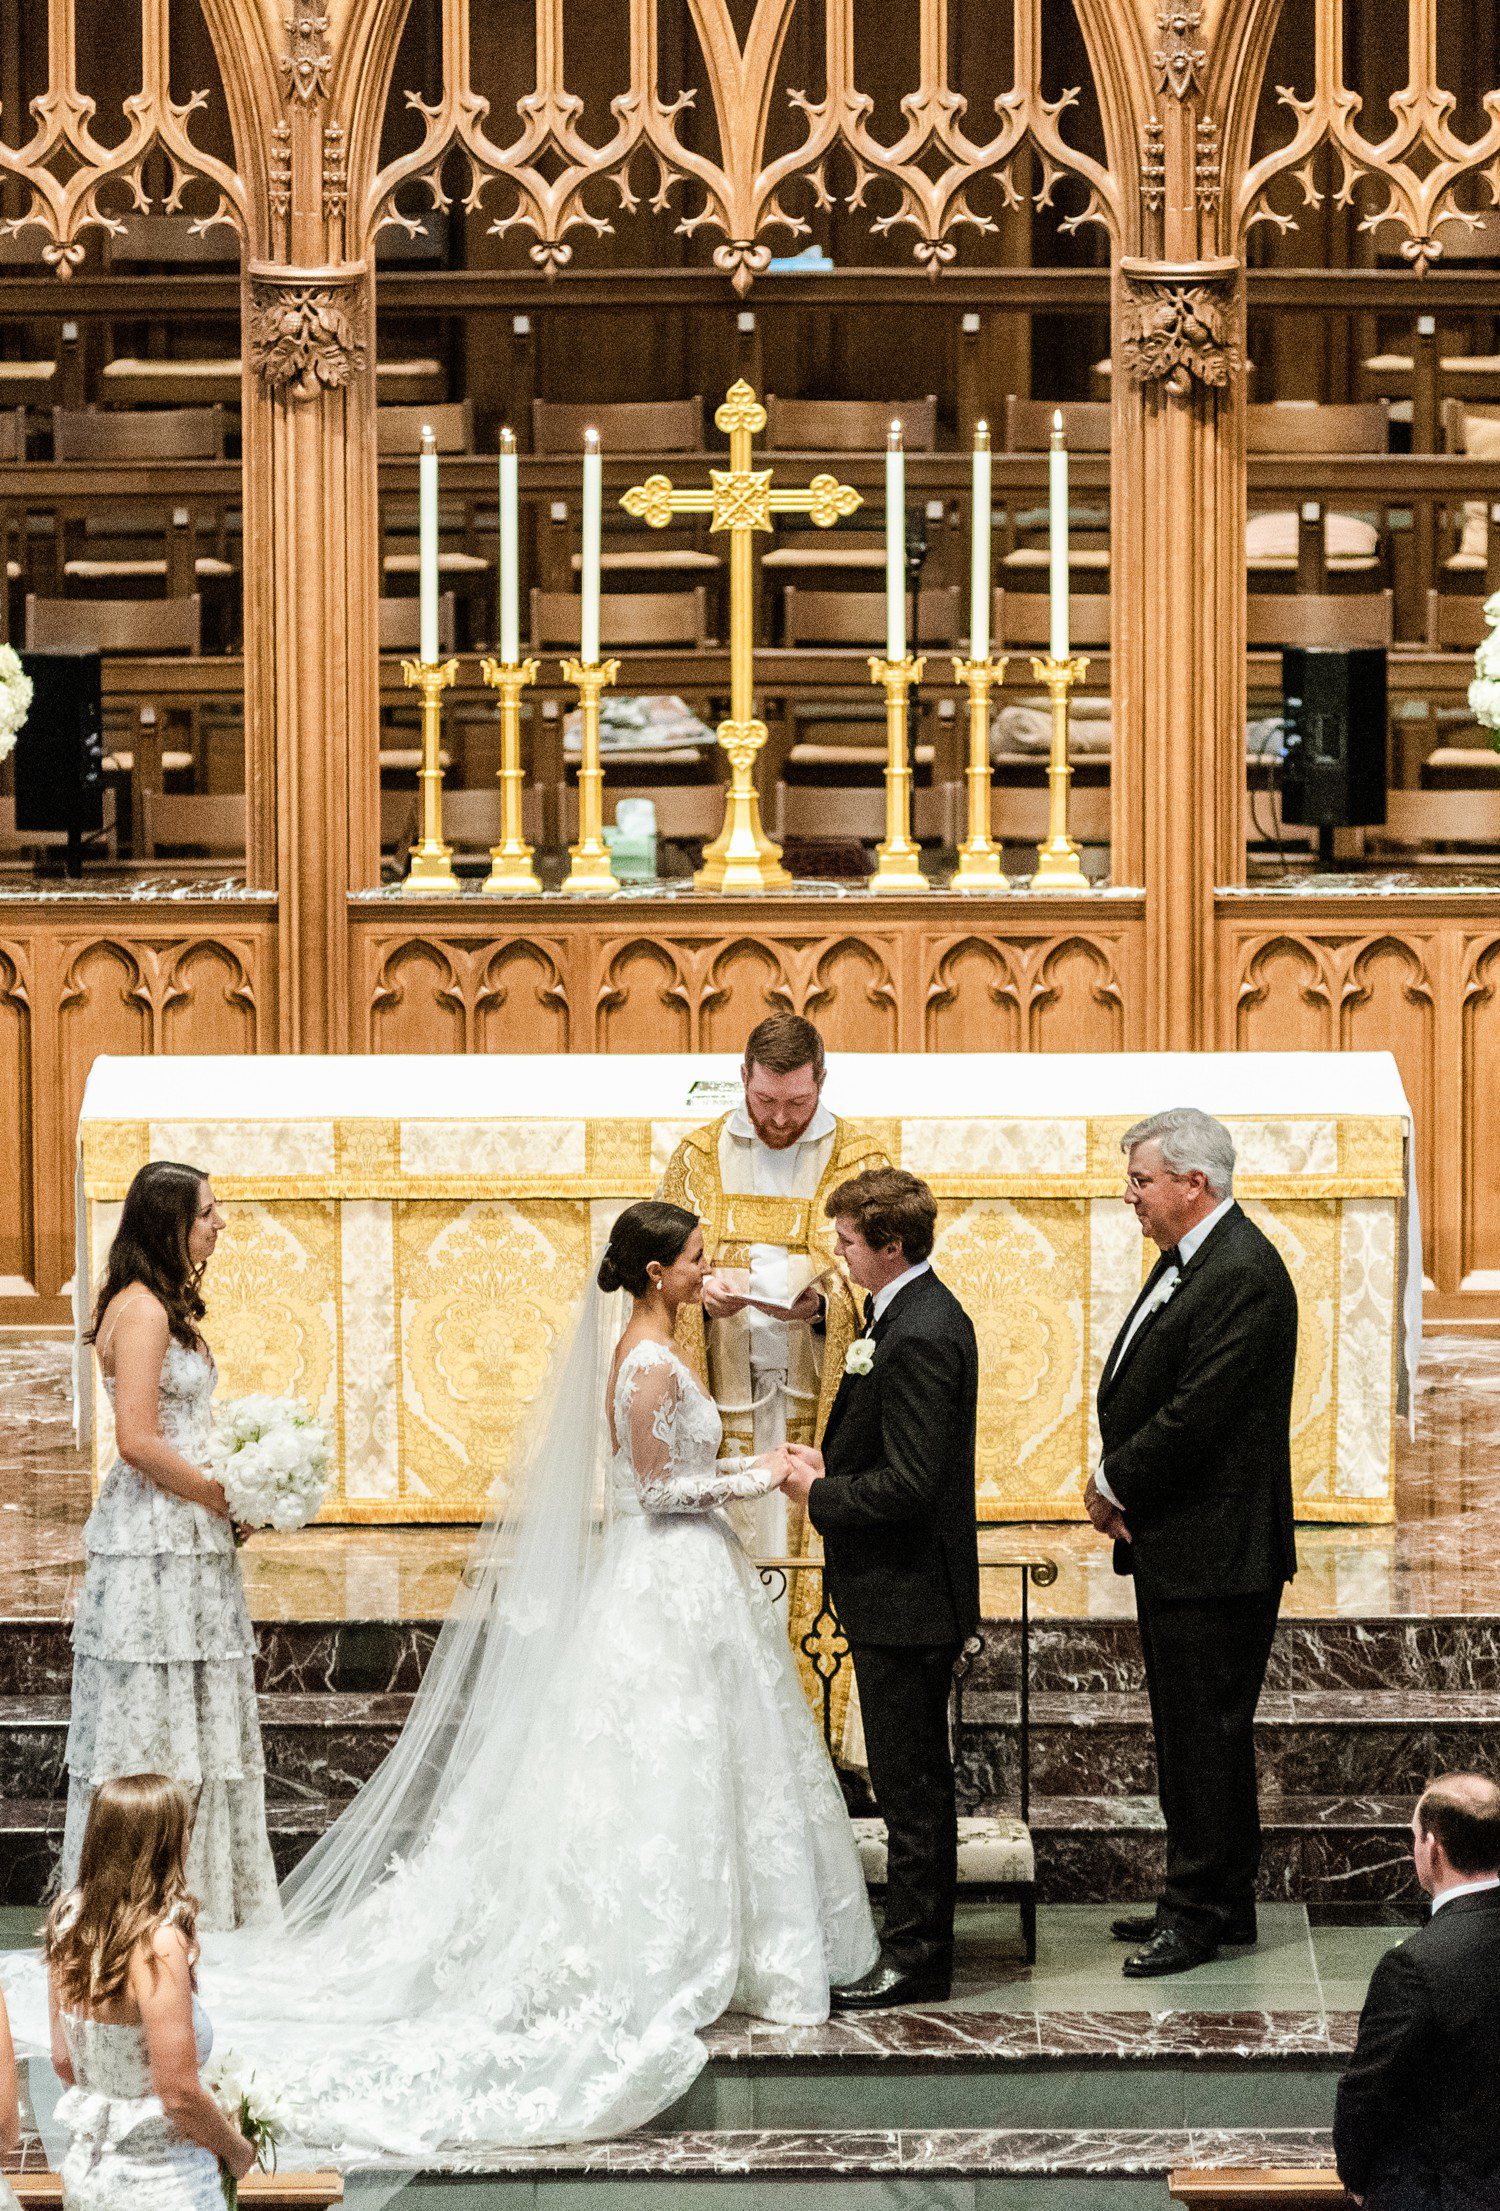 Wedding ceremony at St. Martin's Episcopal Church in Houston.